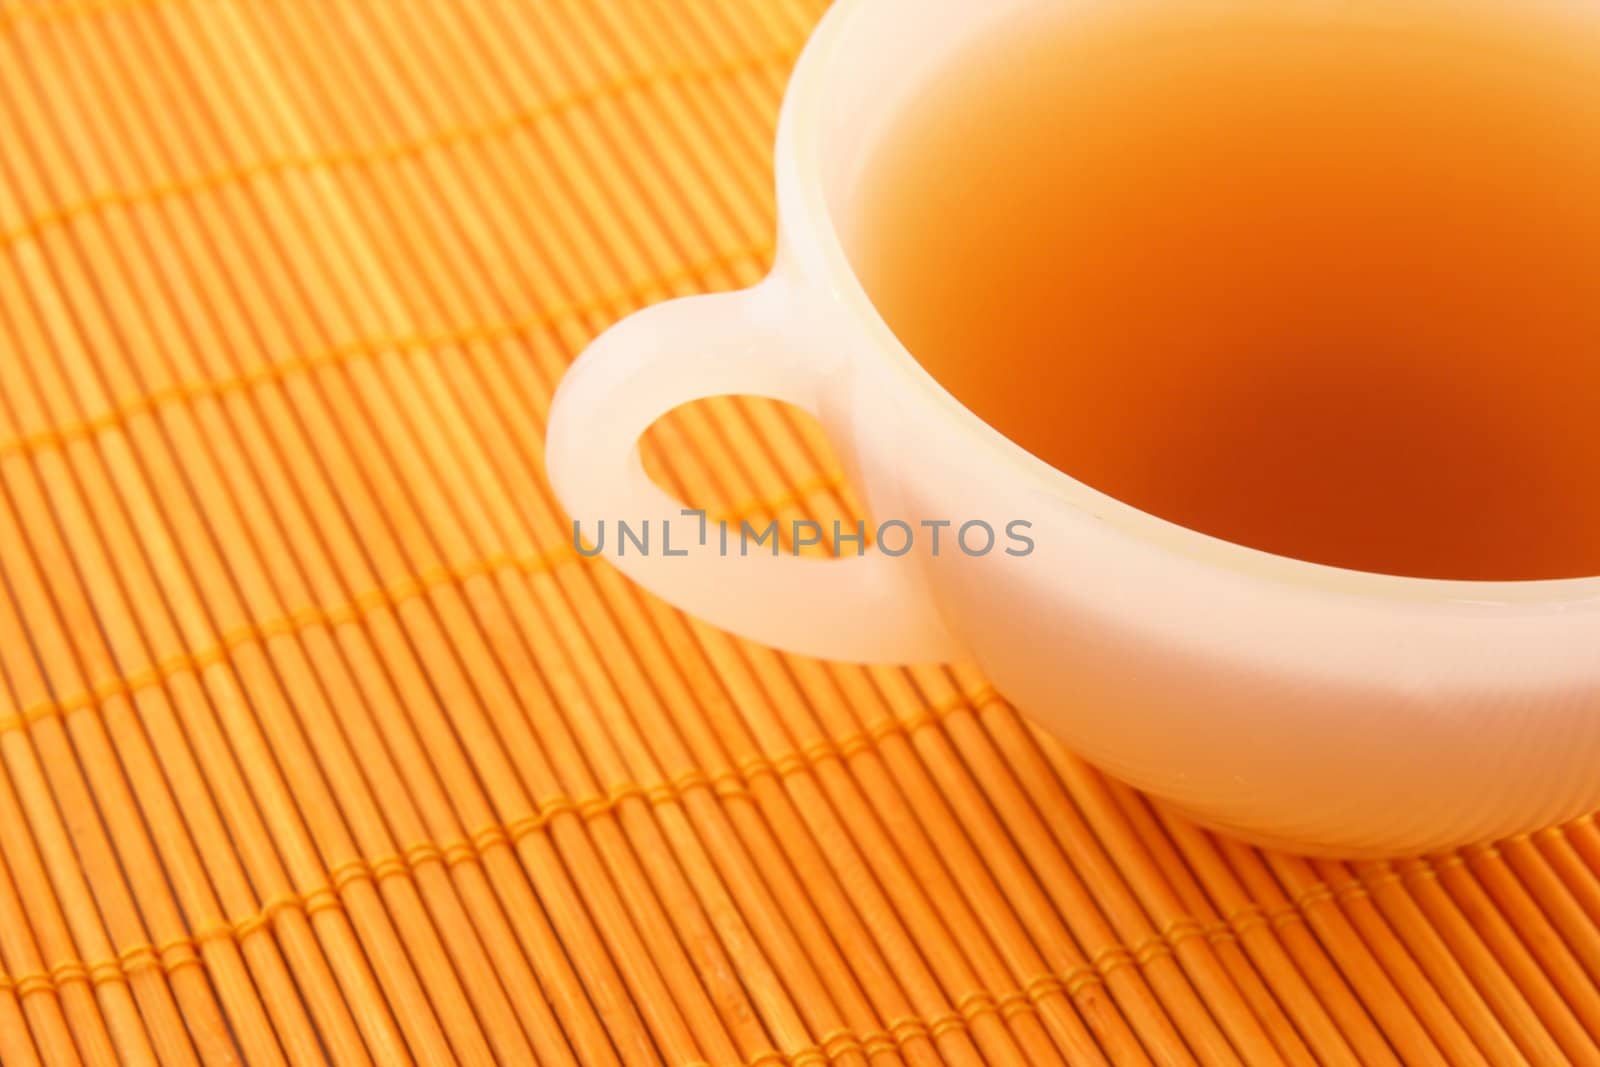 Cup of tea on orange rattan mat by anikasalsera